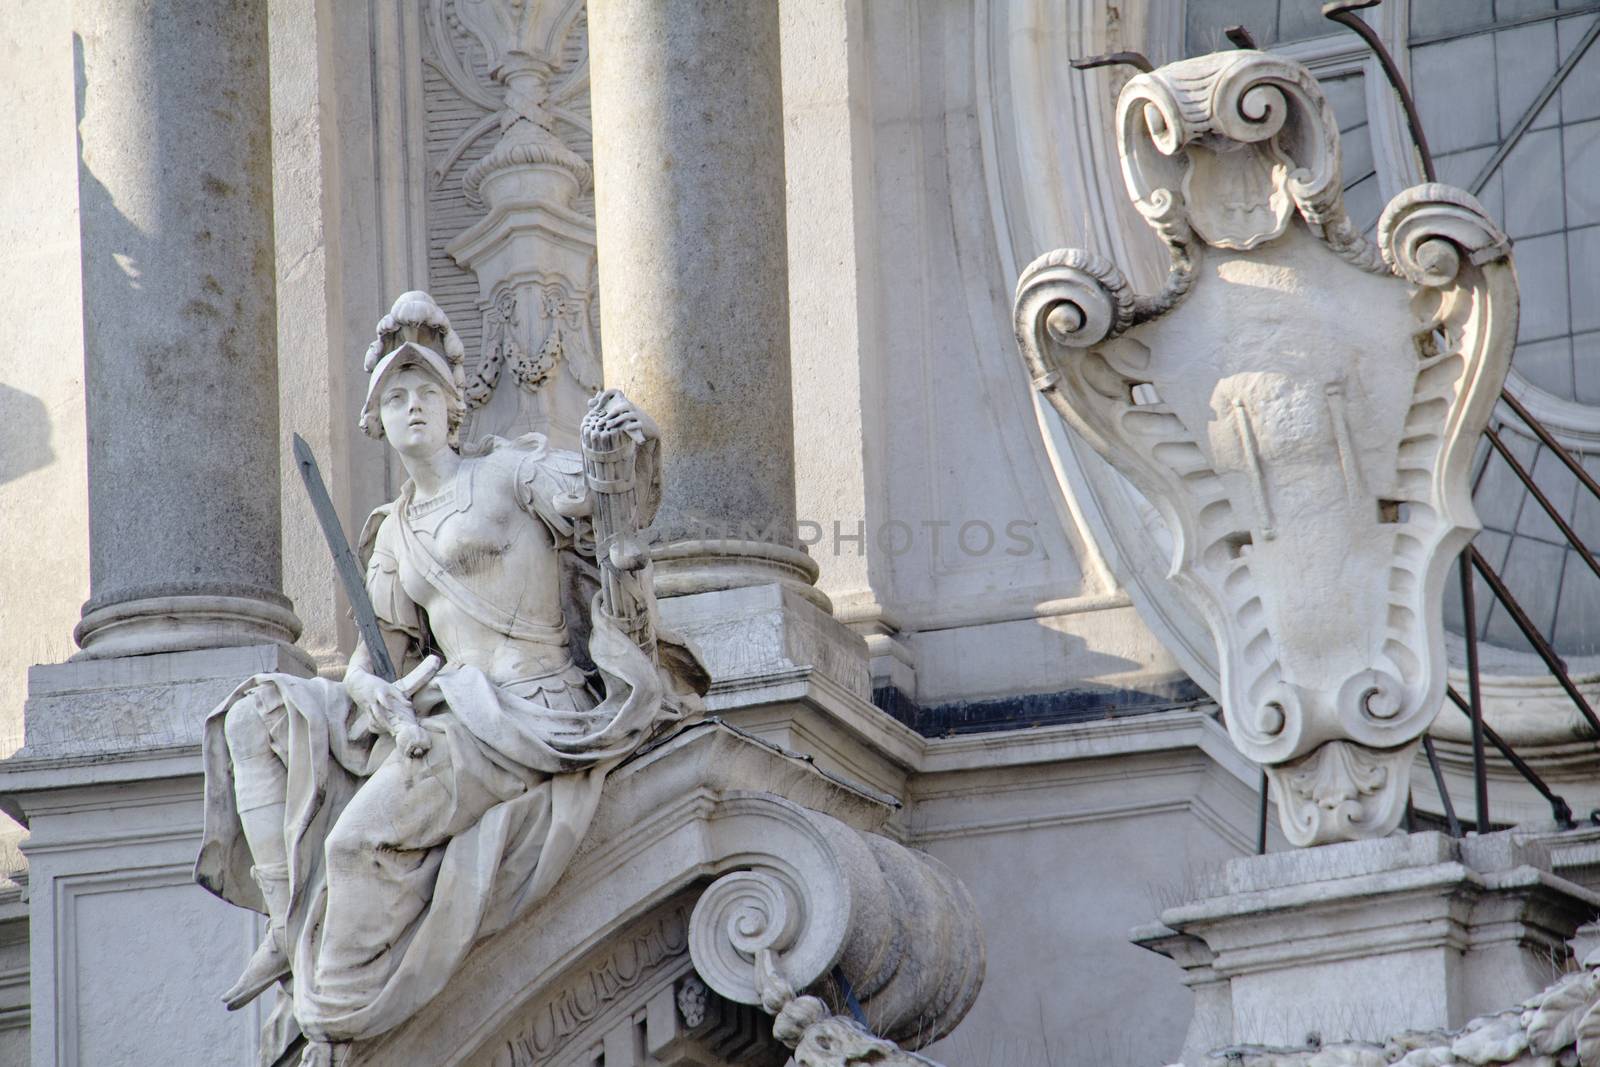 Statues in Torino by Aarstudio